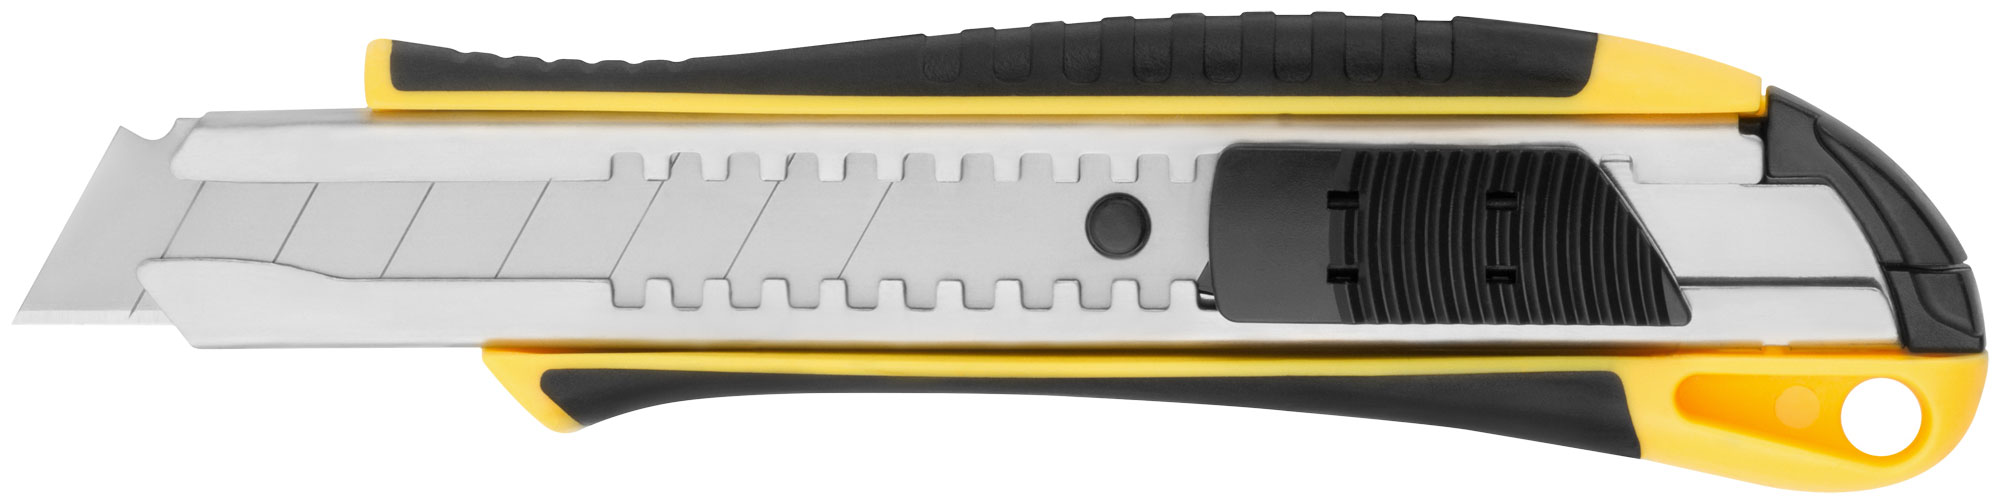 FIT IT  Нож технический 18 мм усиленный прорезиненный, 2-х сторонняя автофиксация